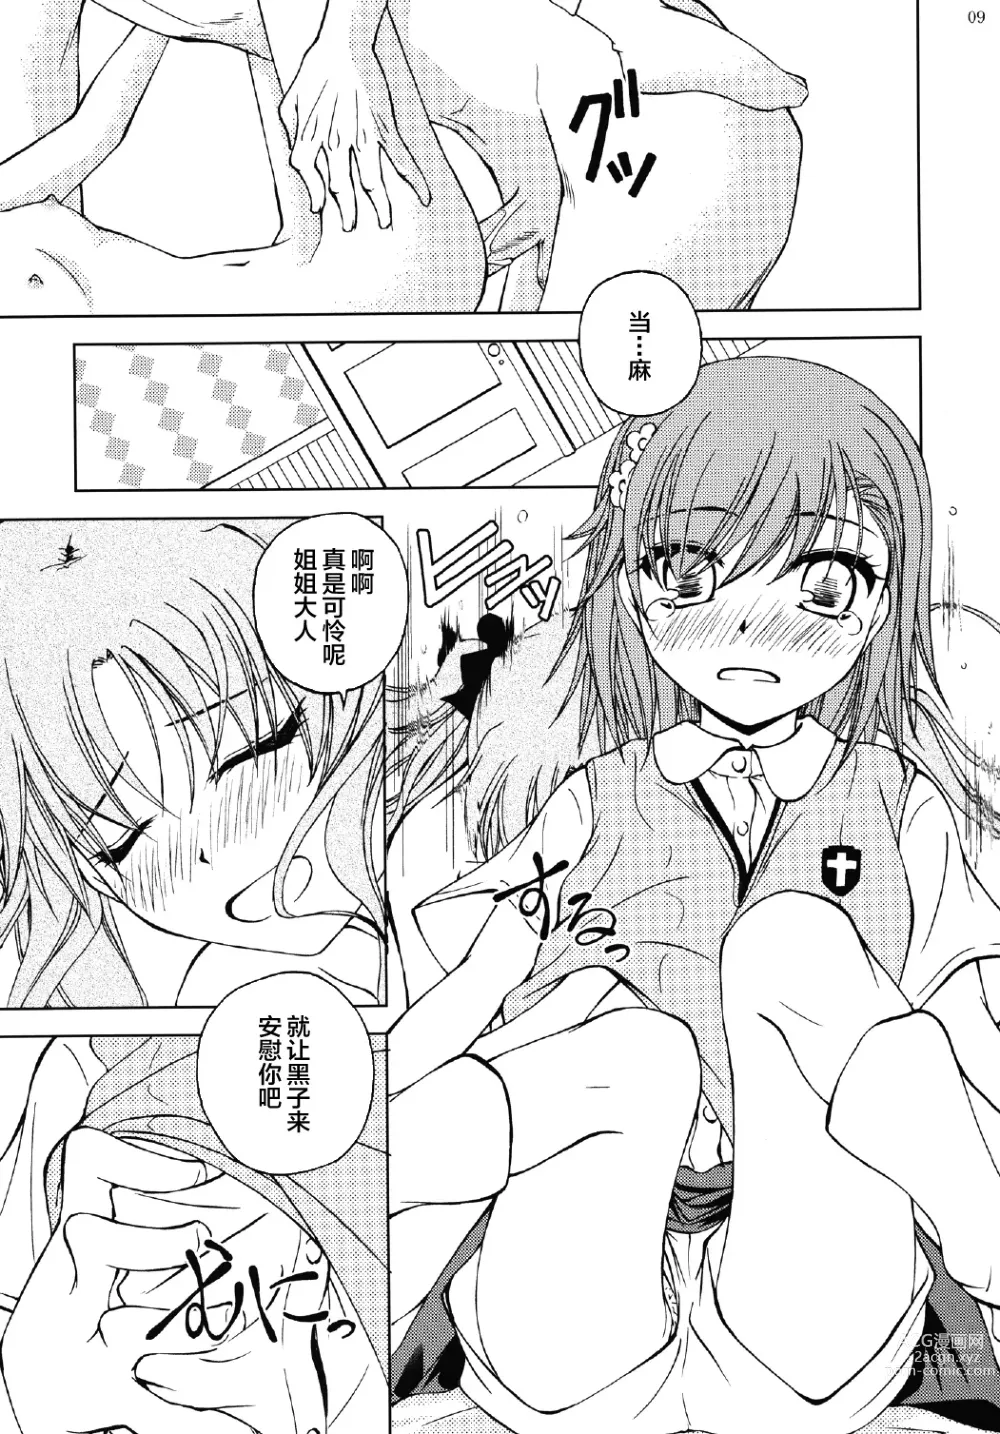 Page 9 of doujinshi Onee-sama o Ruijinen to Sememakuri desu no!!